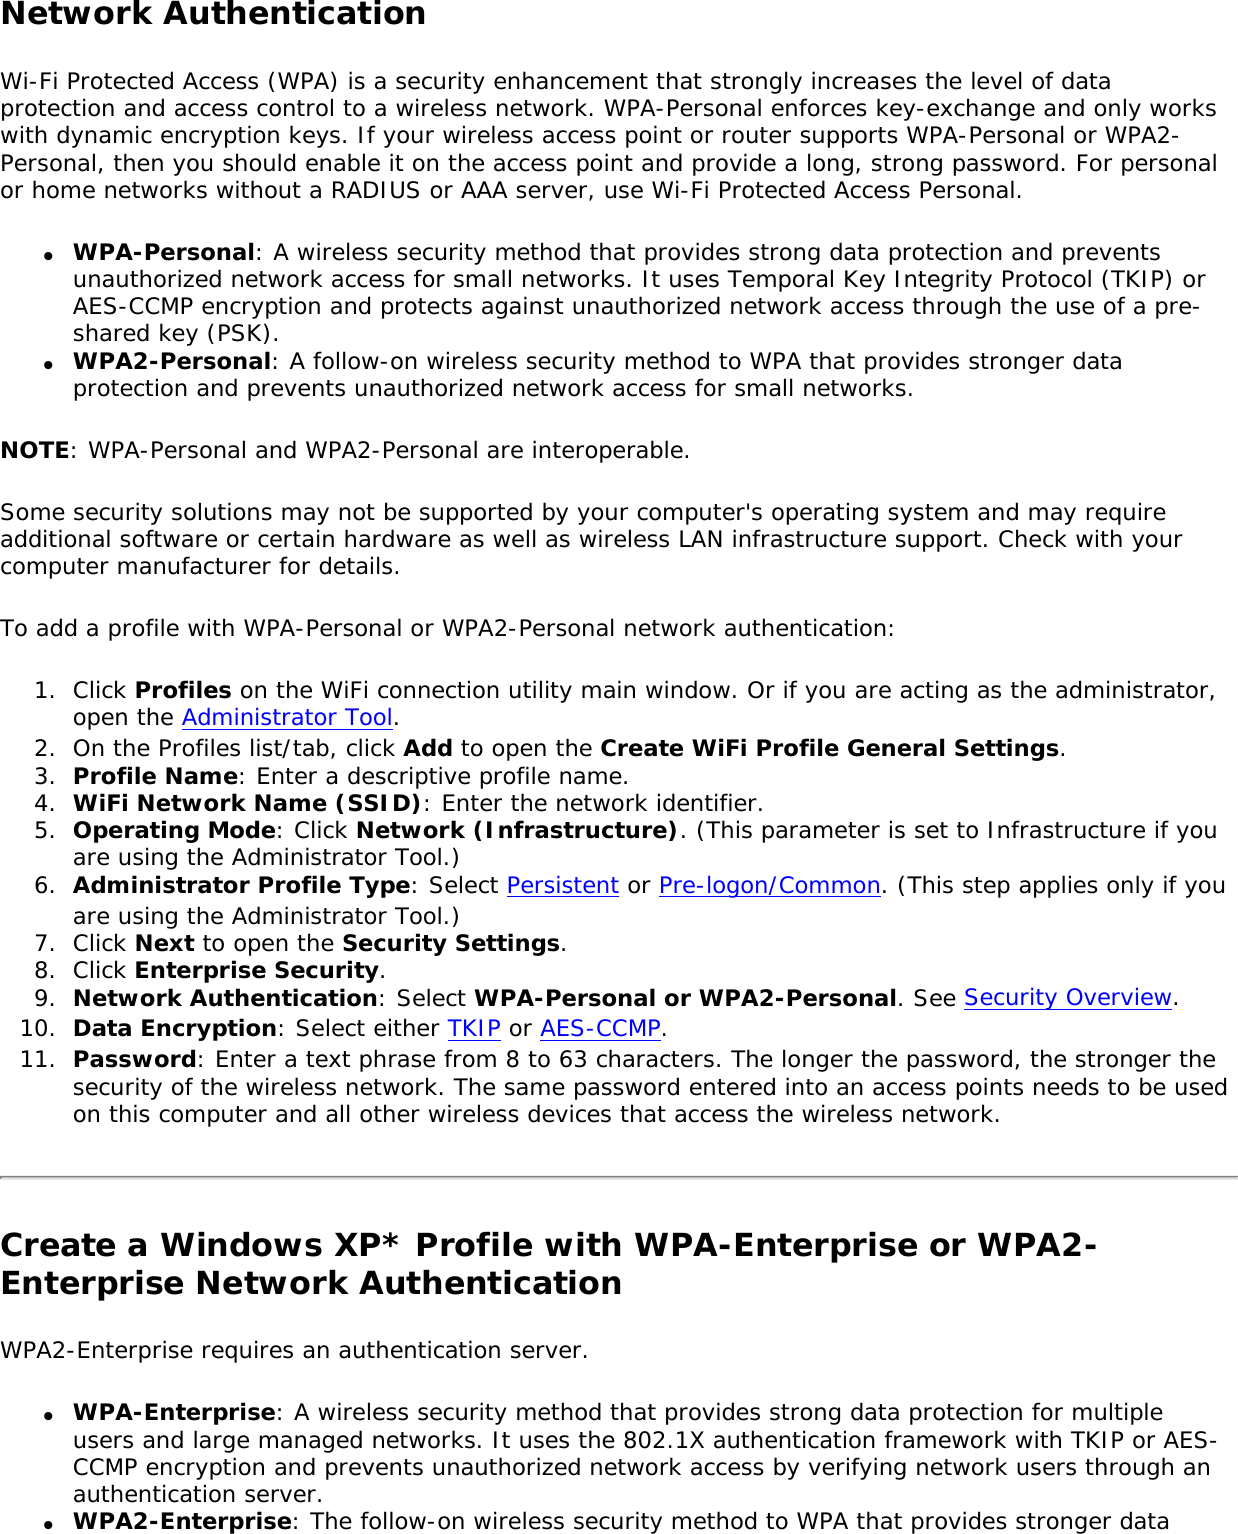 Page 161 of Intel 112BNM Intel Centrino Wireless-N 1000 User Manual Contents